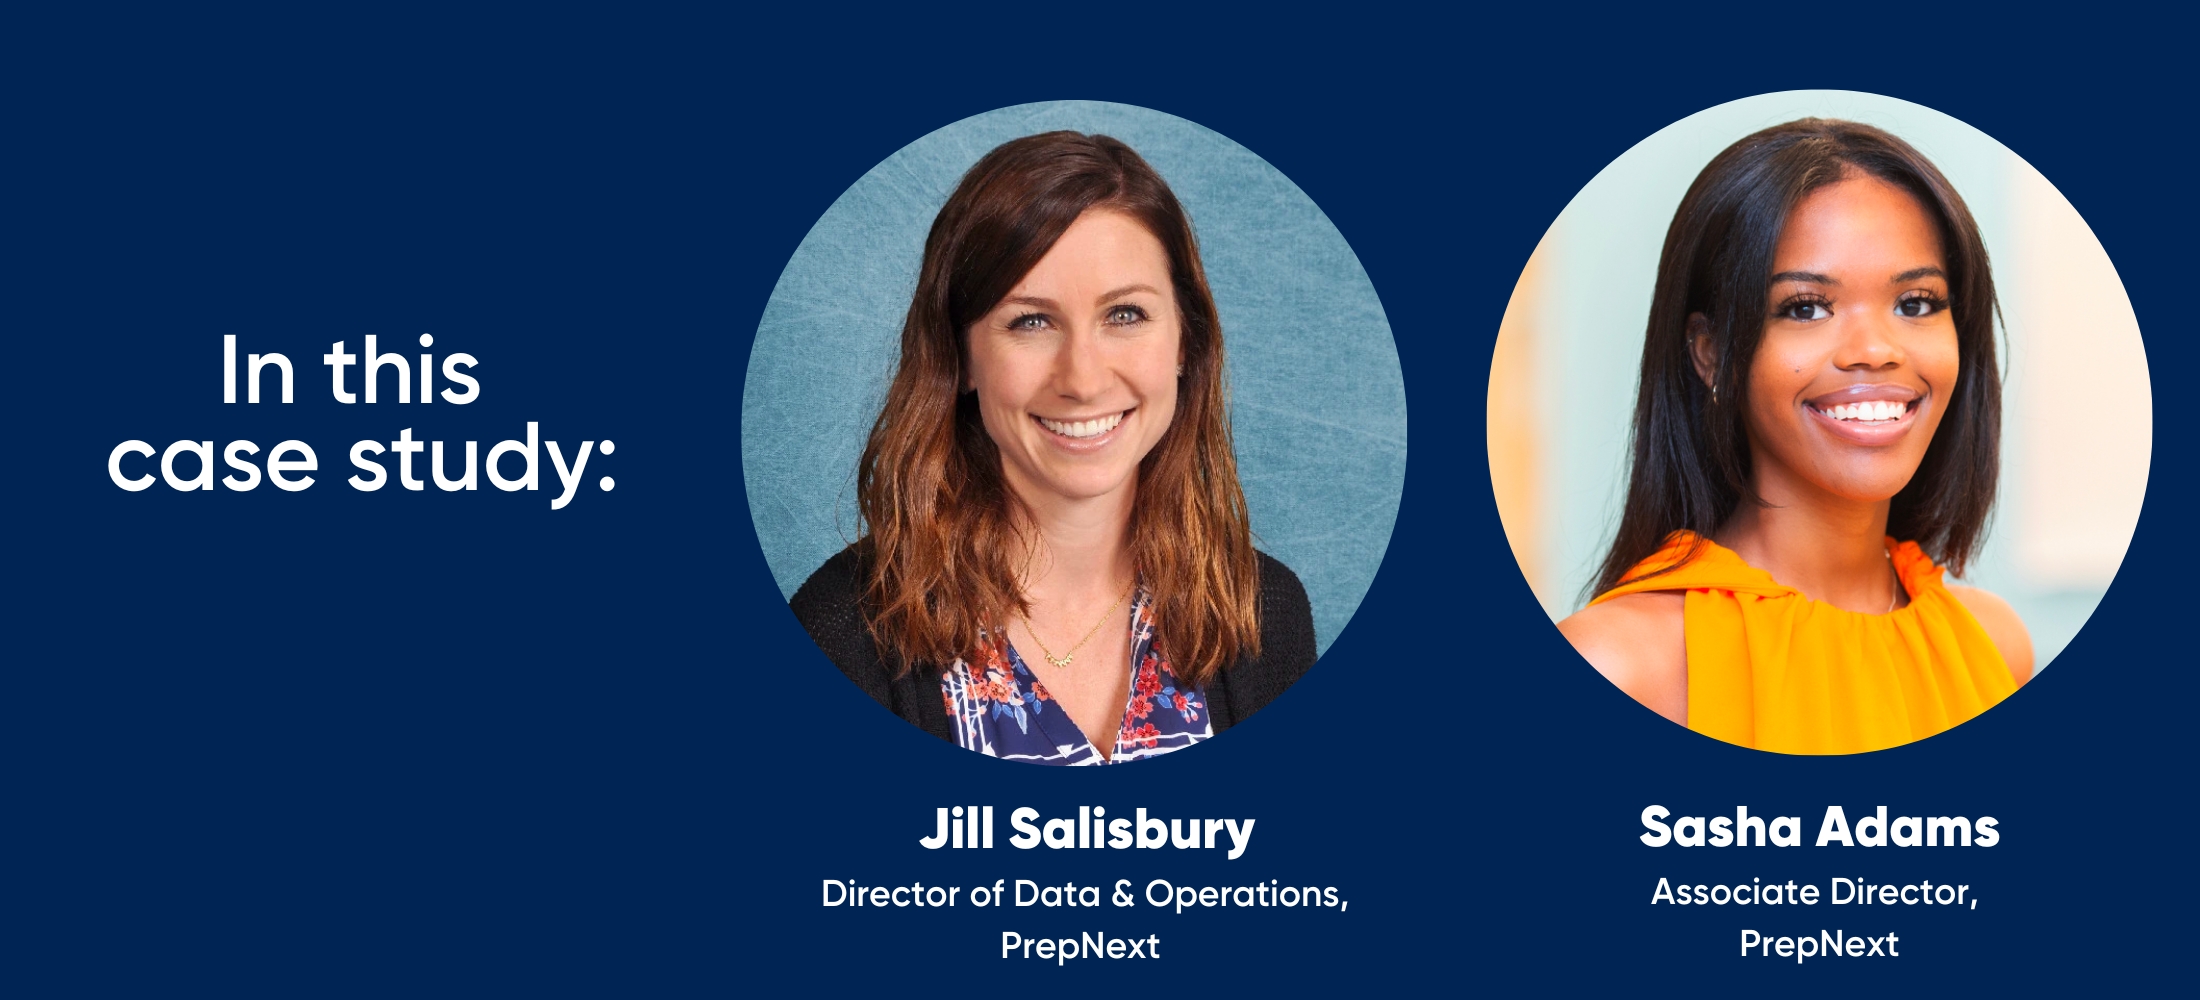 in this case study: Jill Salisbury - Director of Data & Operations, PrepNext and Sasha Adams, Associate Director, PrepNext 